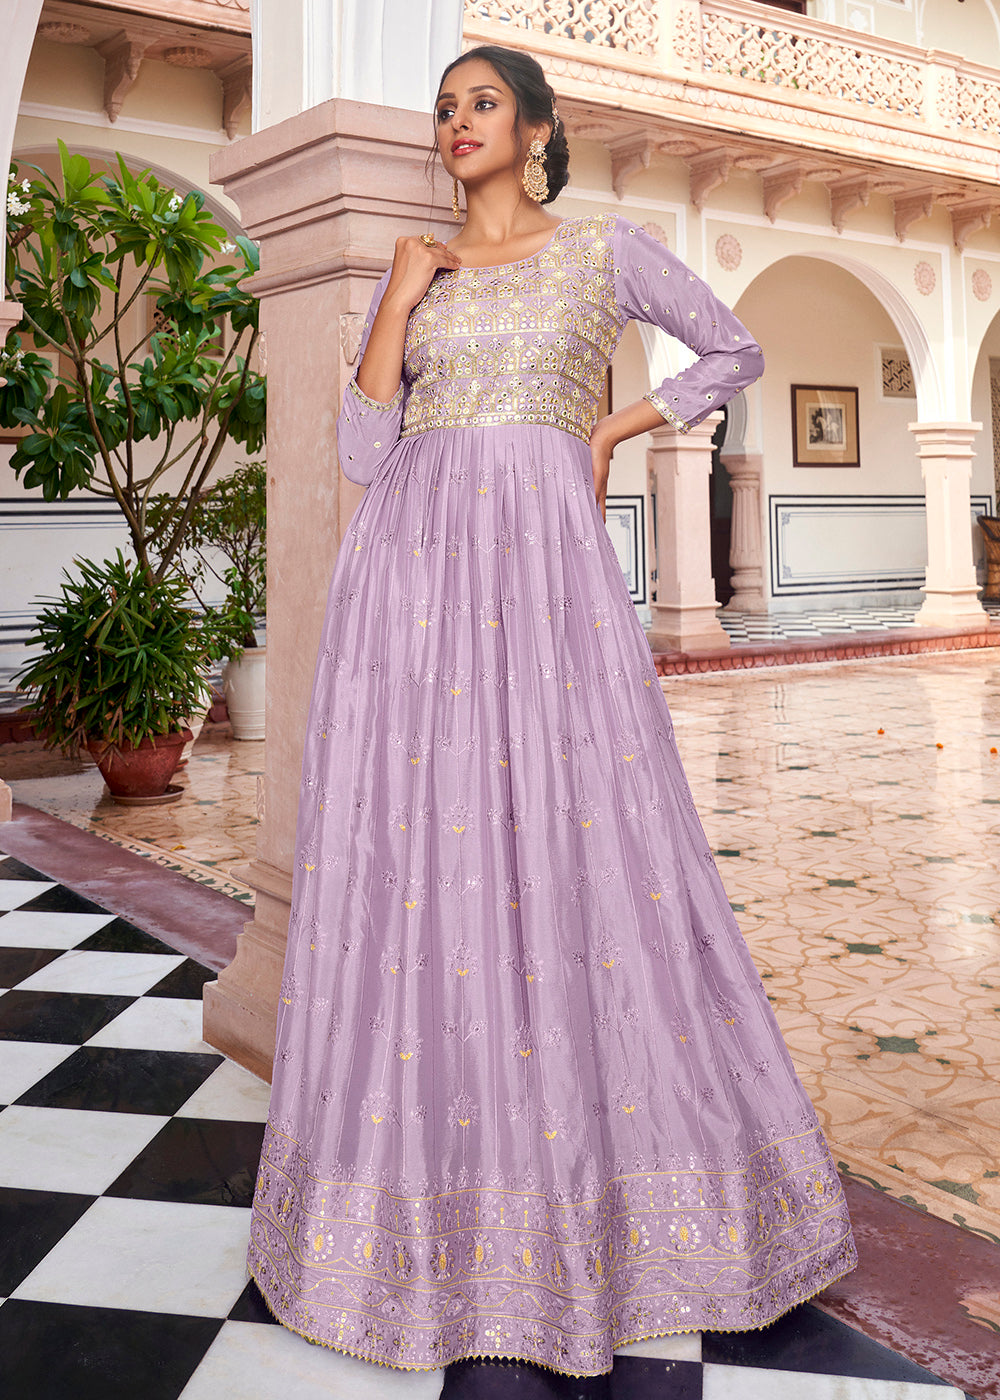 Buy Now Pastel Lilac Pretty Embellished Work Anarkali Dress Online in USA, UK, Australia, New Zealand, Canada & Worldwide at Empress Clothing.